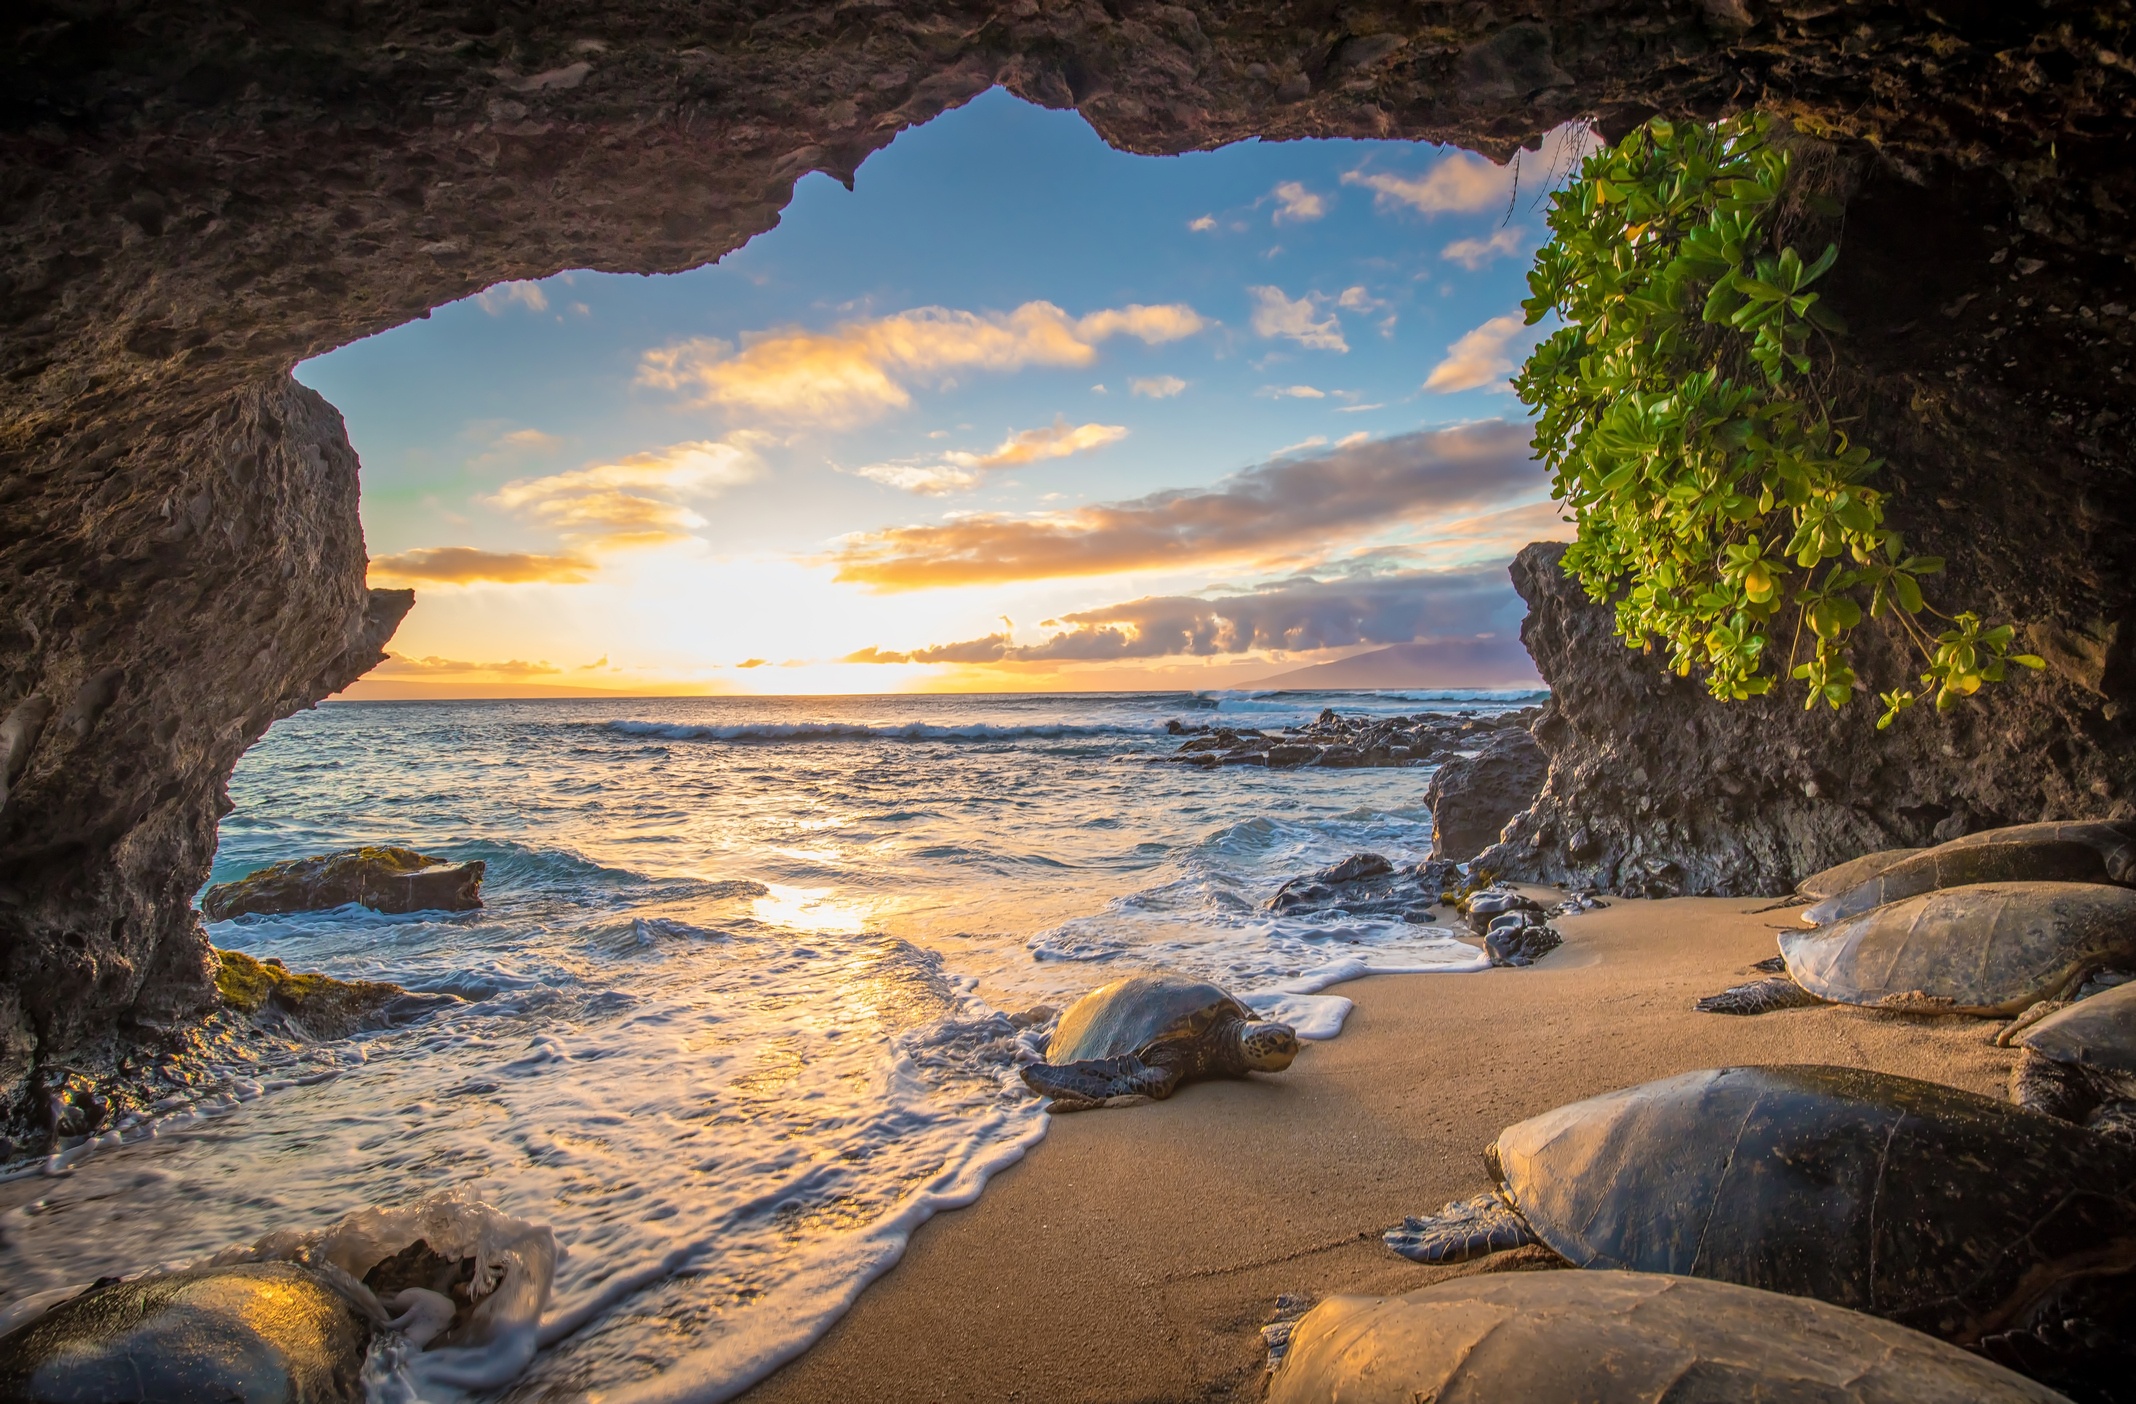 Maui, Hawaii 2020 Holiday Destinations Private Jet